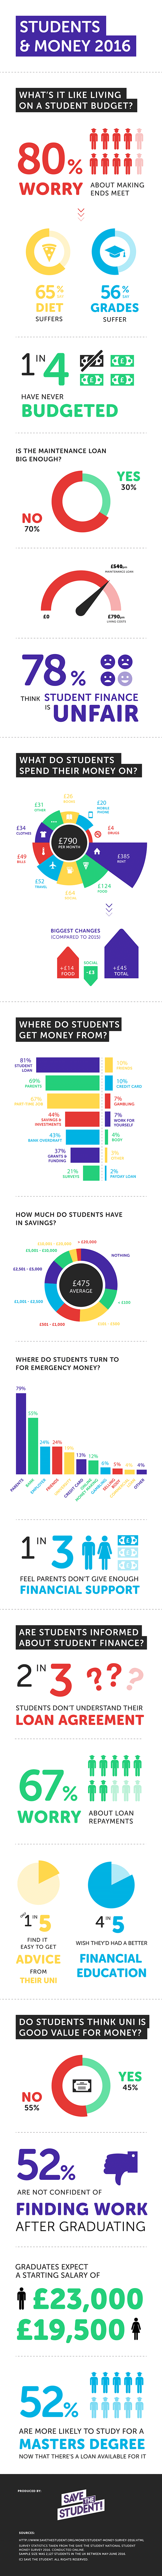 National Student Money Survey 2016 Infographic